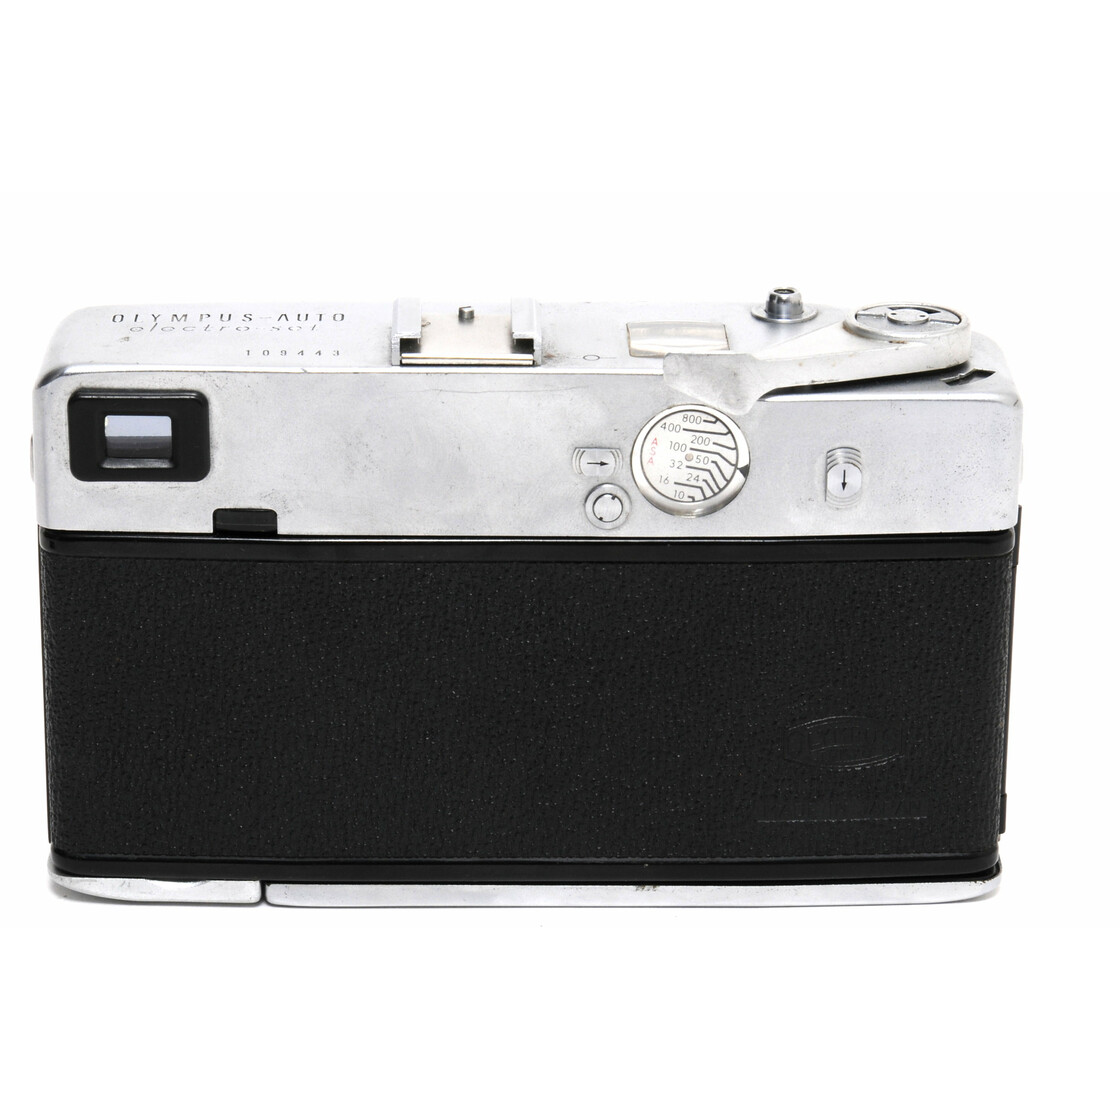 Olympus-Auto electro-set camera w. Zuiko 1,8/4,2cm lens